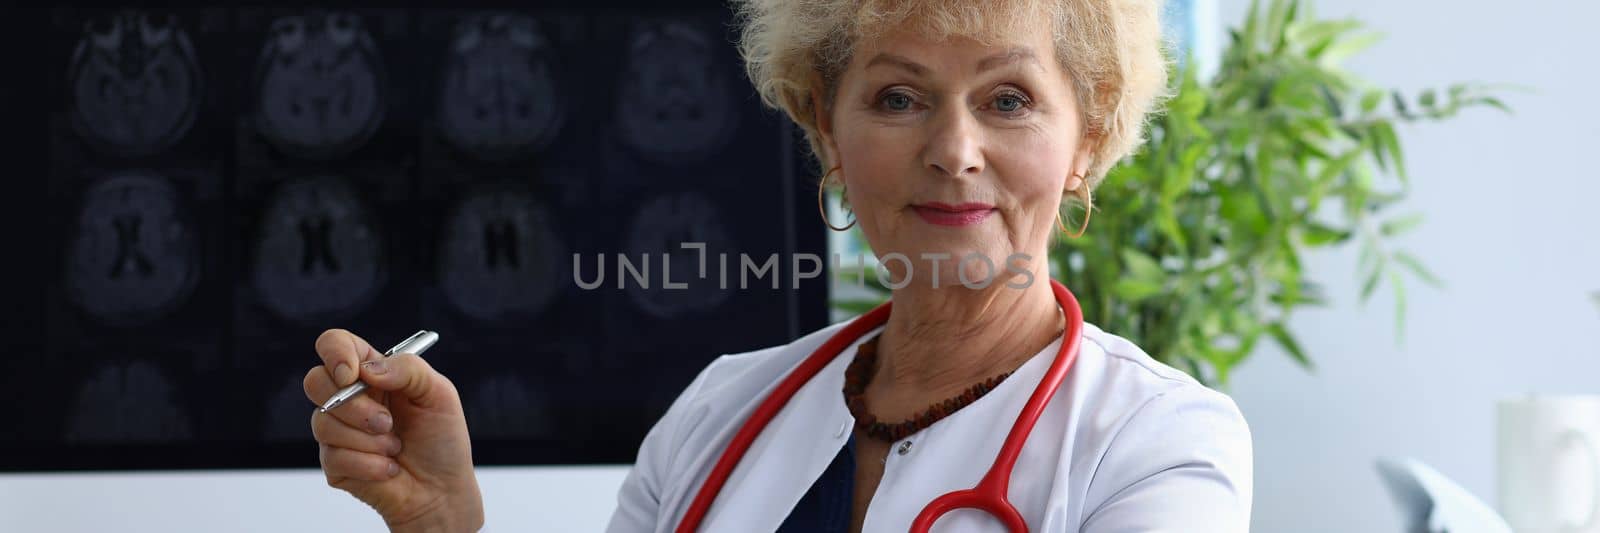 Portrait of elderly woman doctor in field of medicine. Brain examination and dementia concept